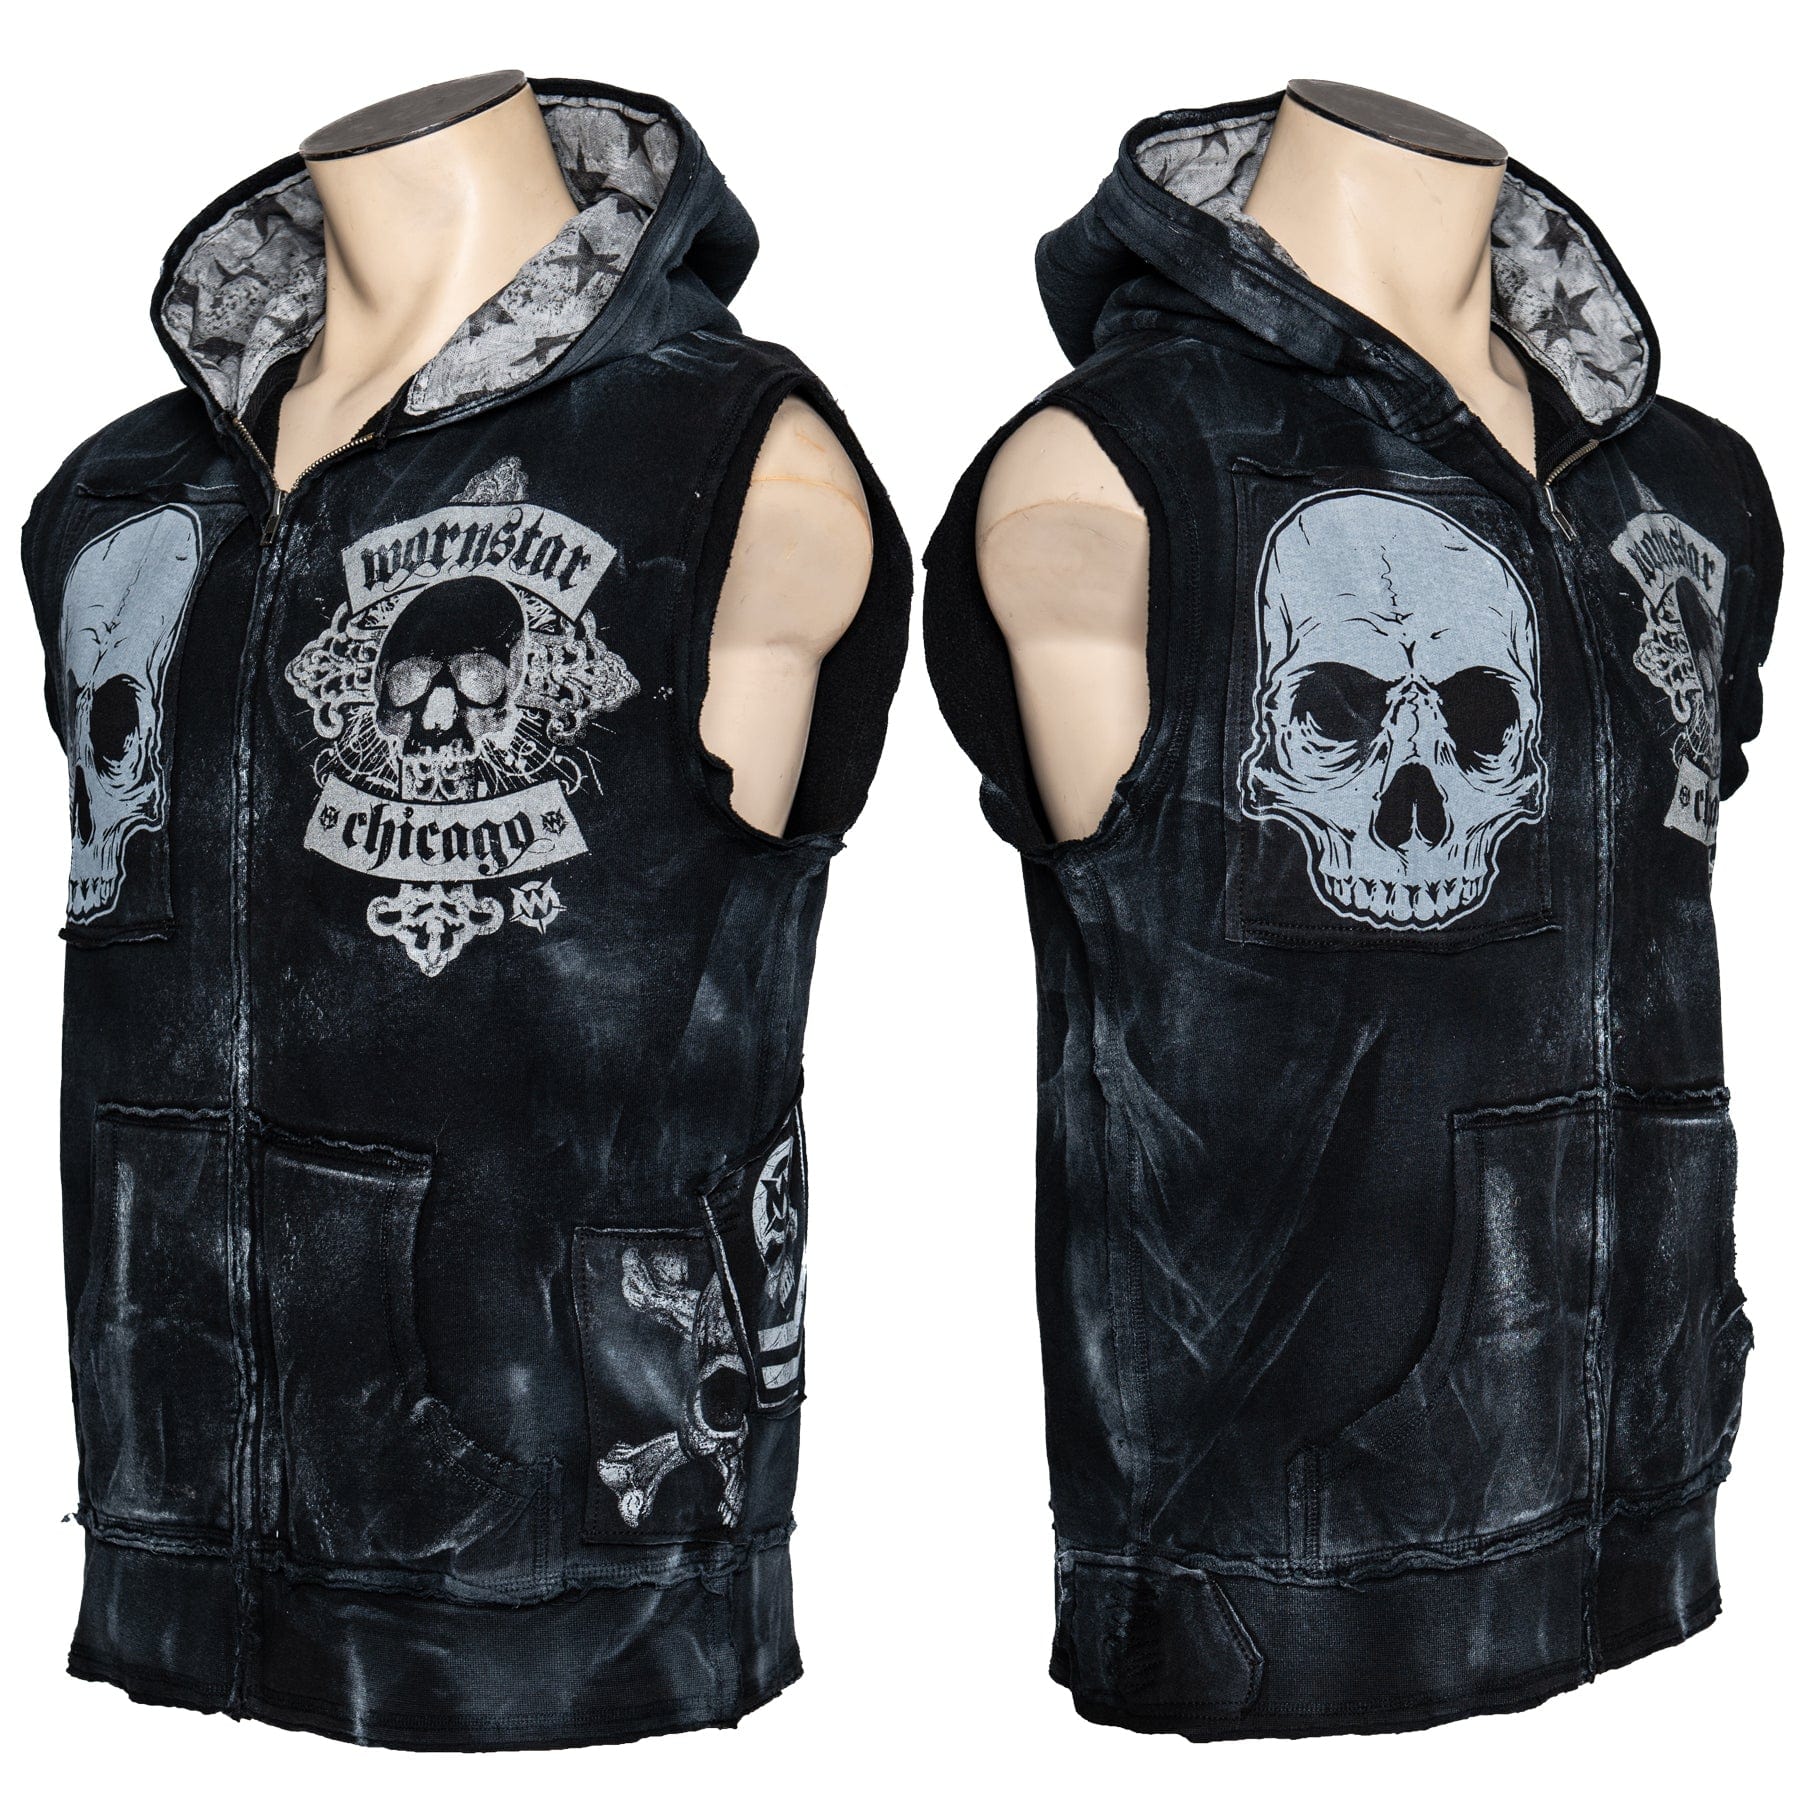 Custom Chop Shop Work Shirt Wornstar Customized Sleeveless Hoodie - Skulls - Ready to ship - Size Large